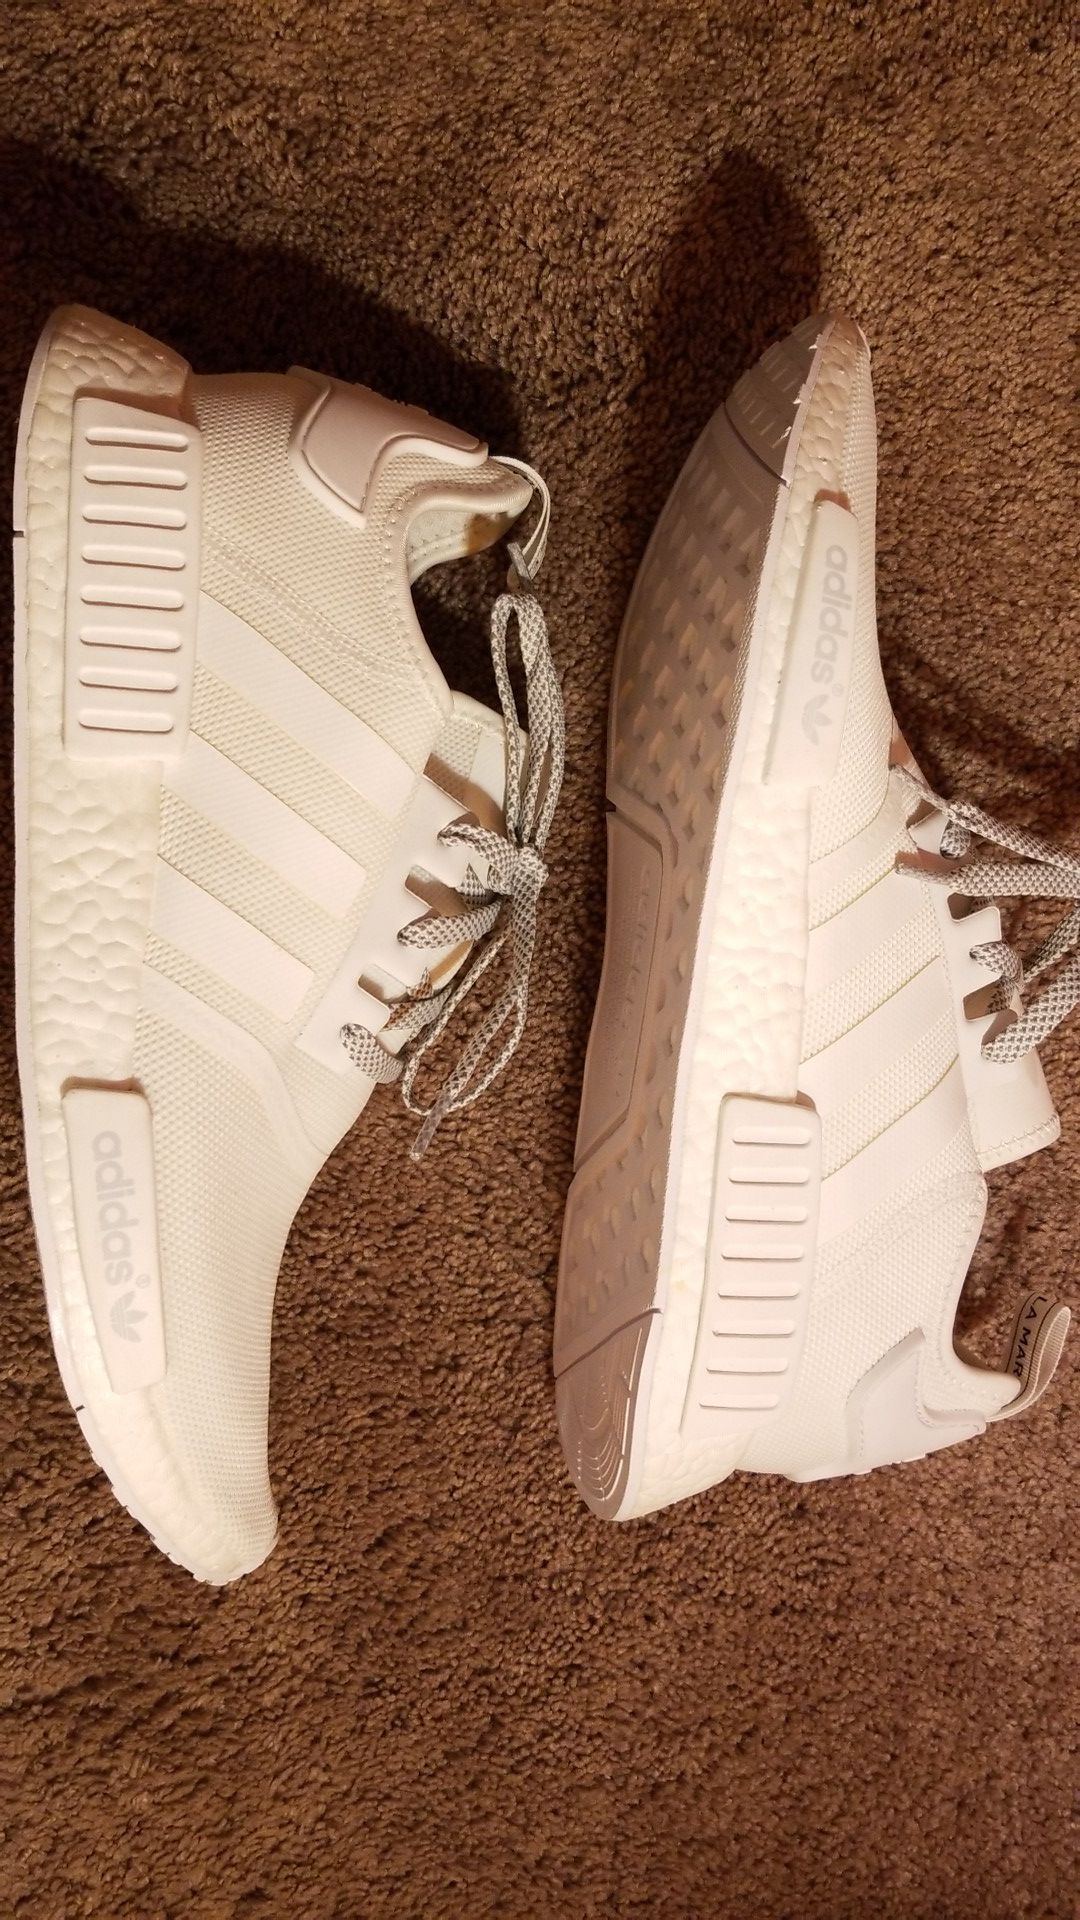 Adidas NMD (Triple White) Size 13